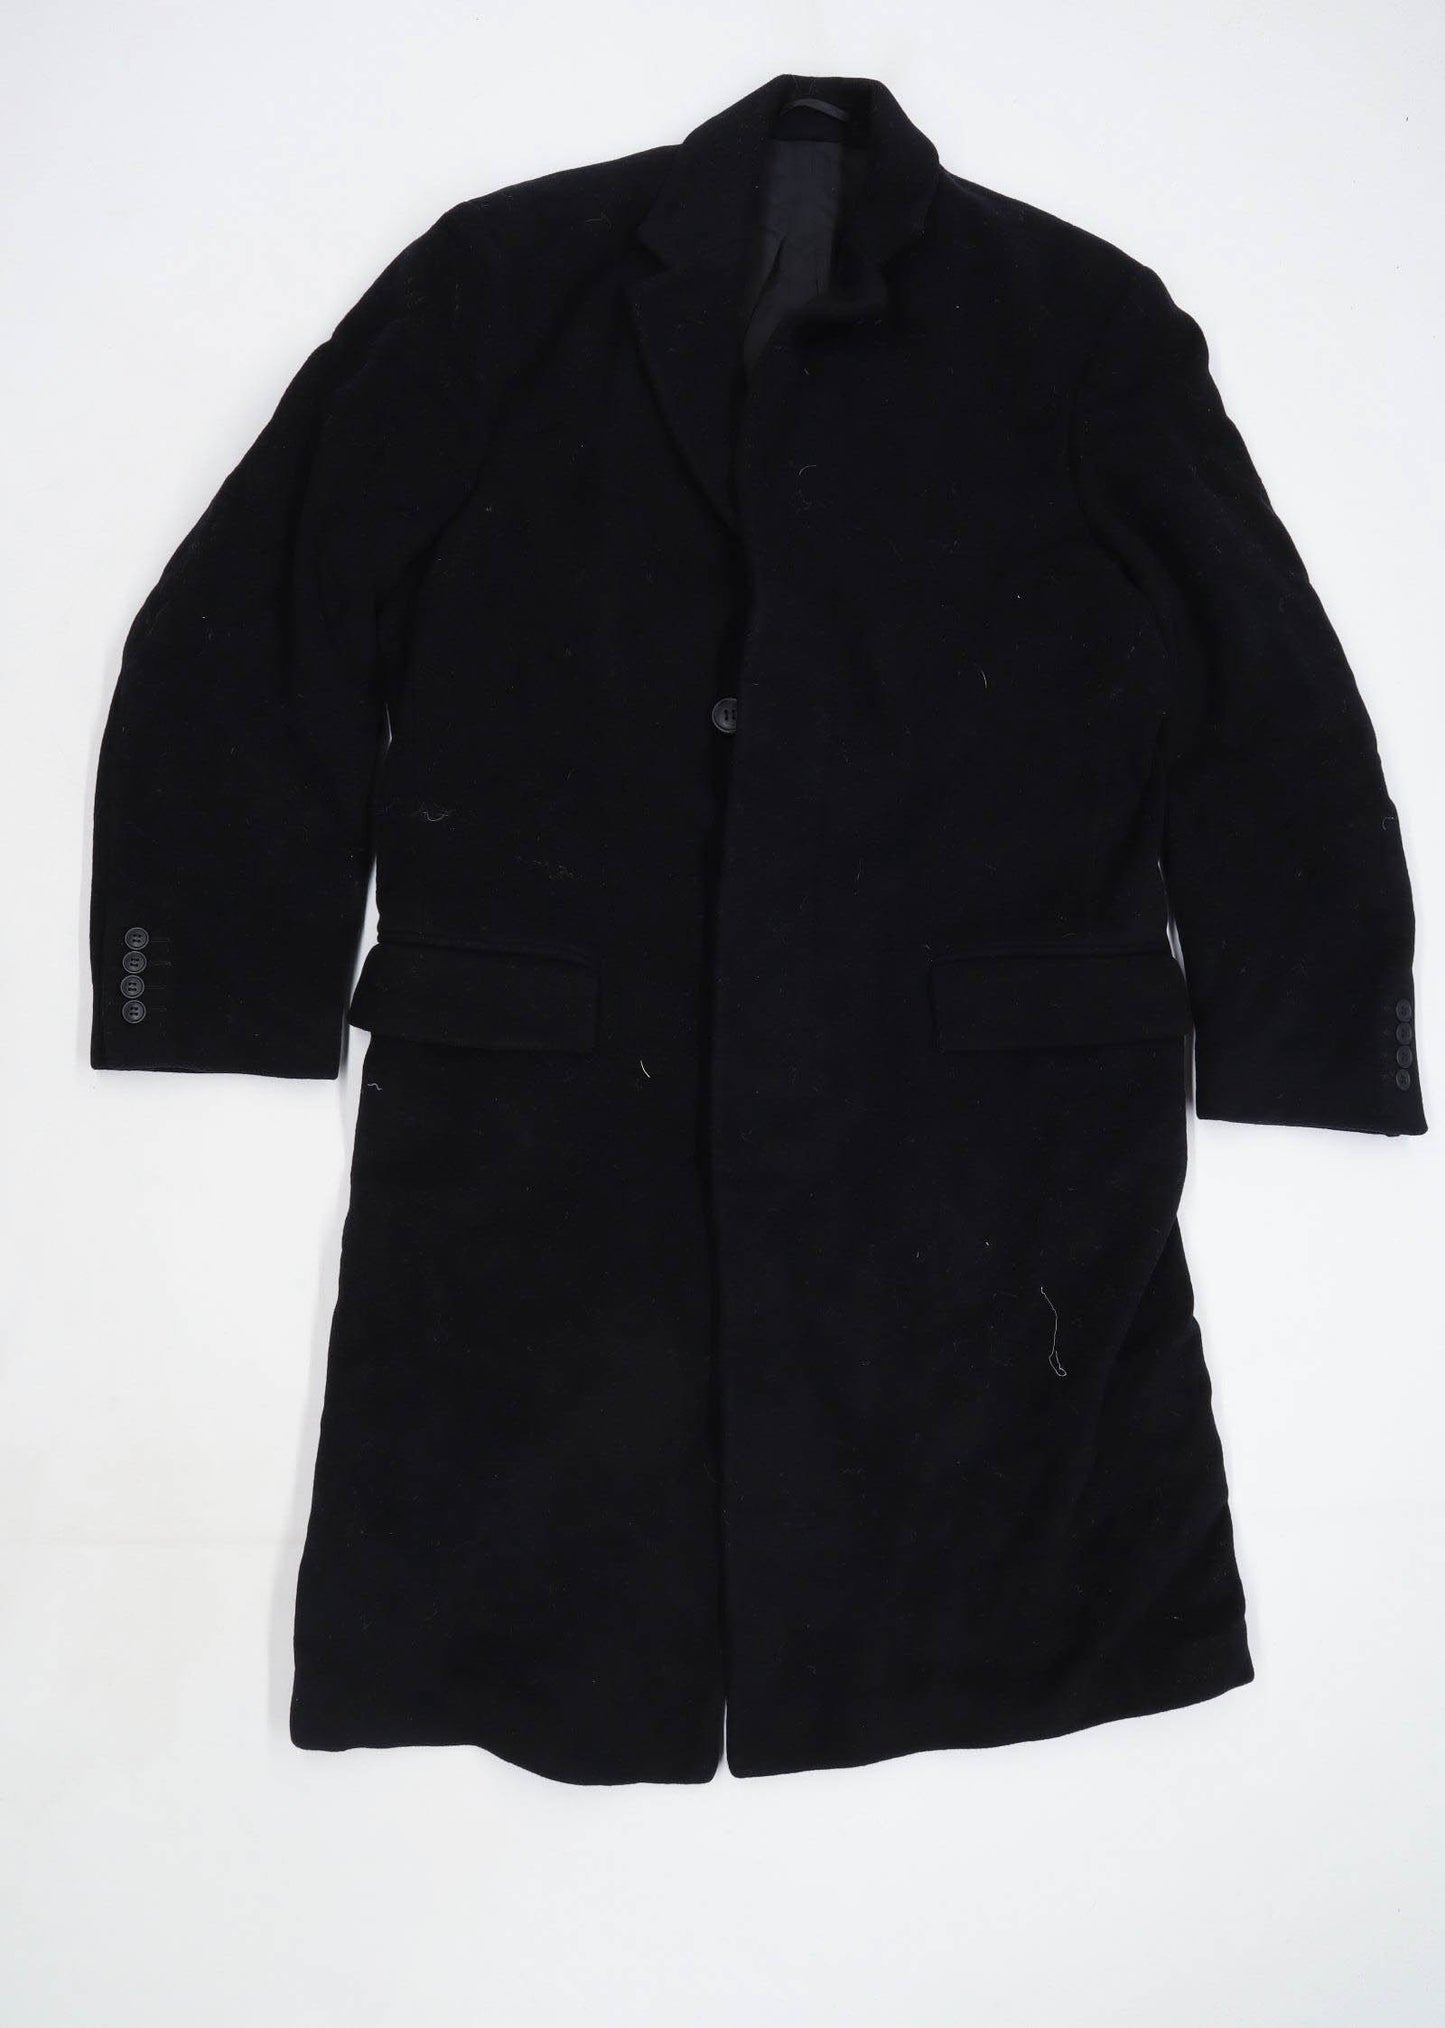 Preworn Mens Size XL Wool Blend Black Coat